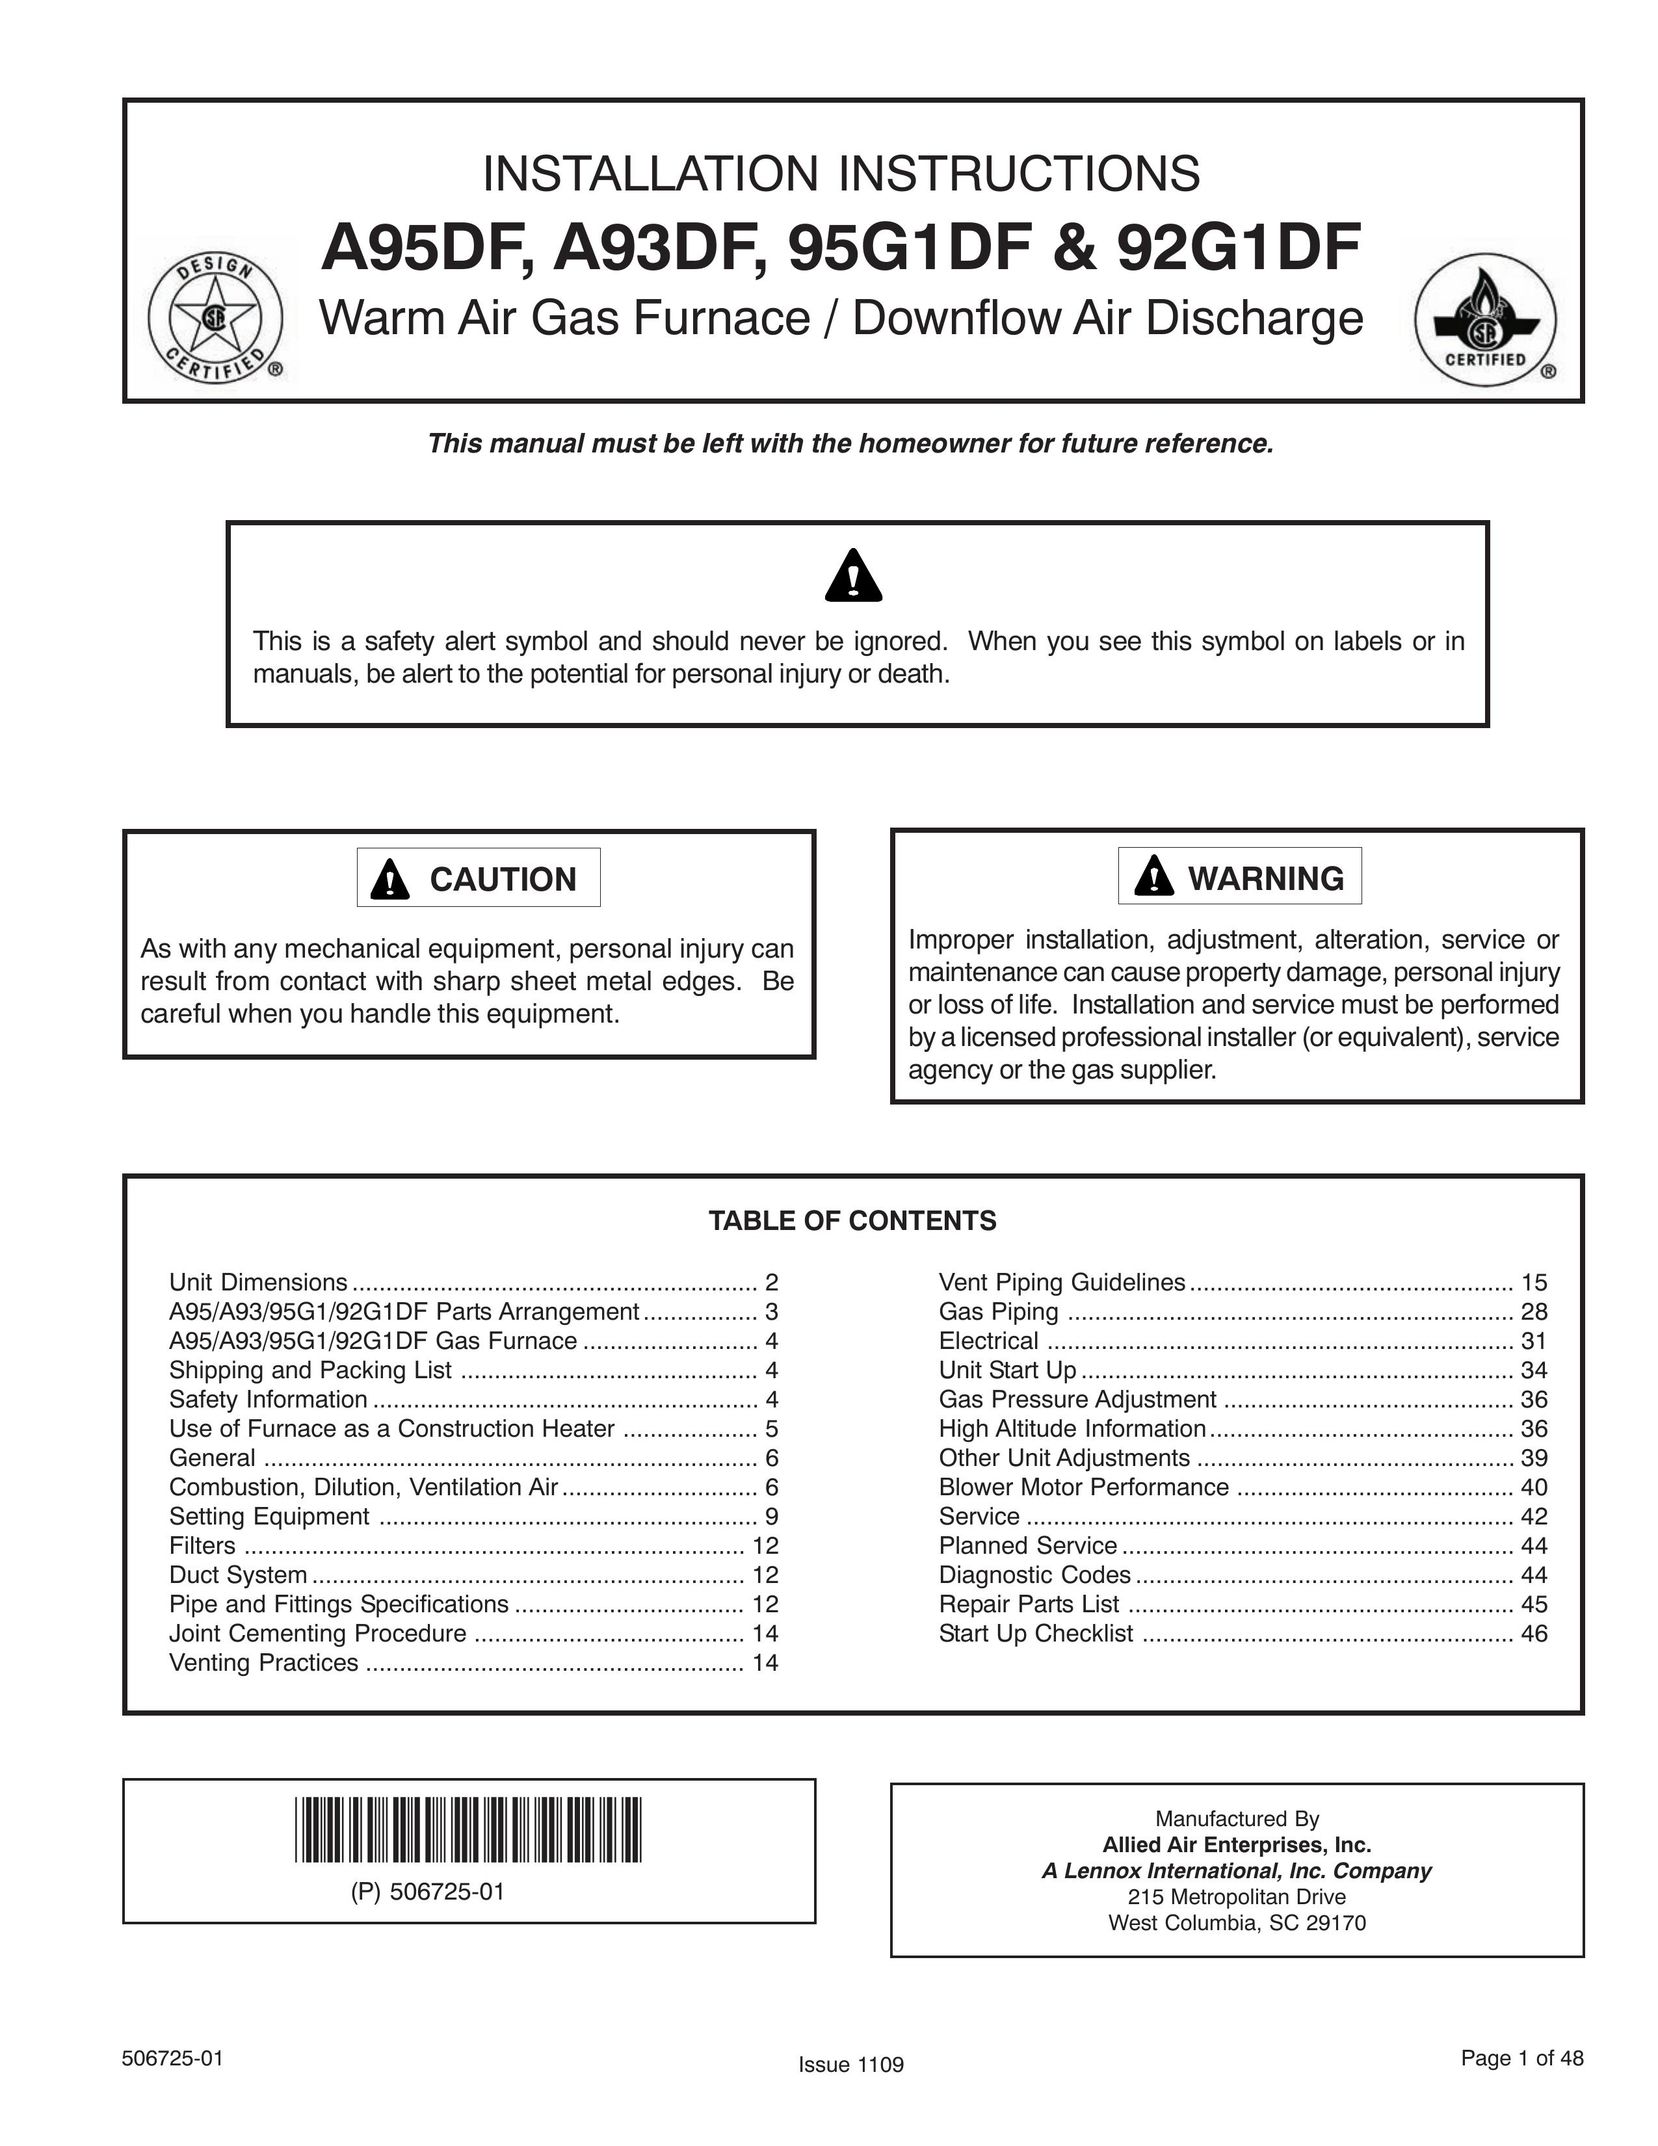 Allied Air Enterprises 95G1DF Furnace User Manual